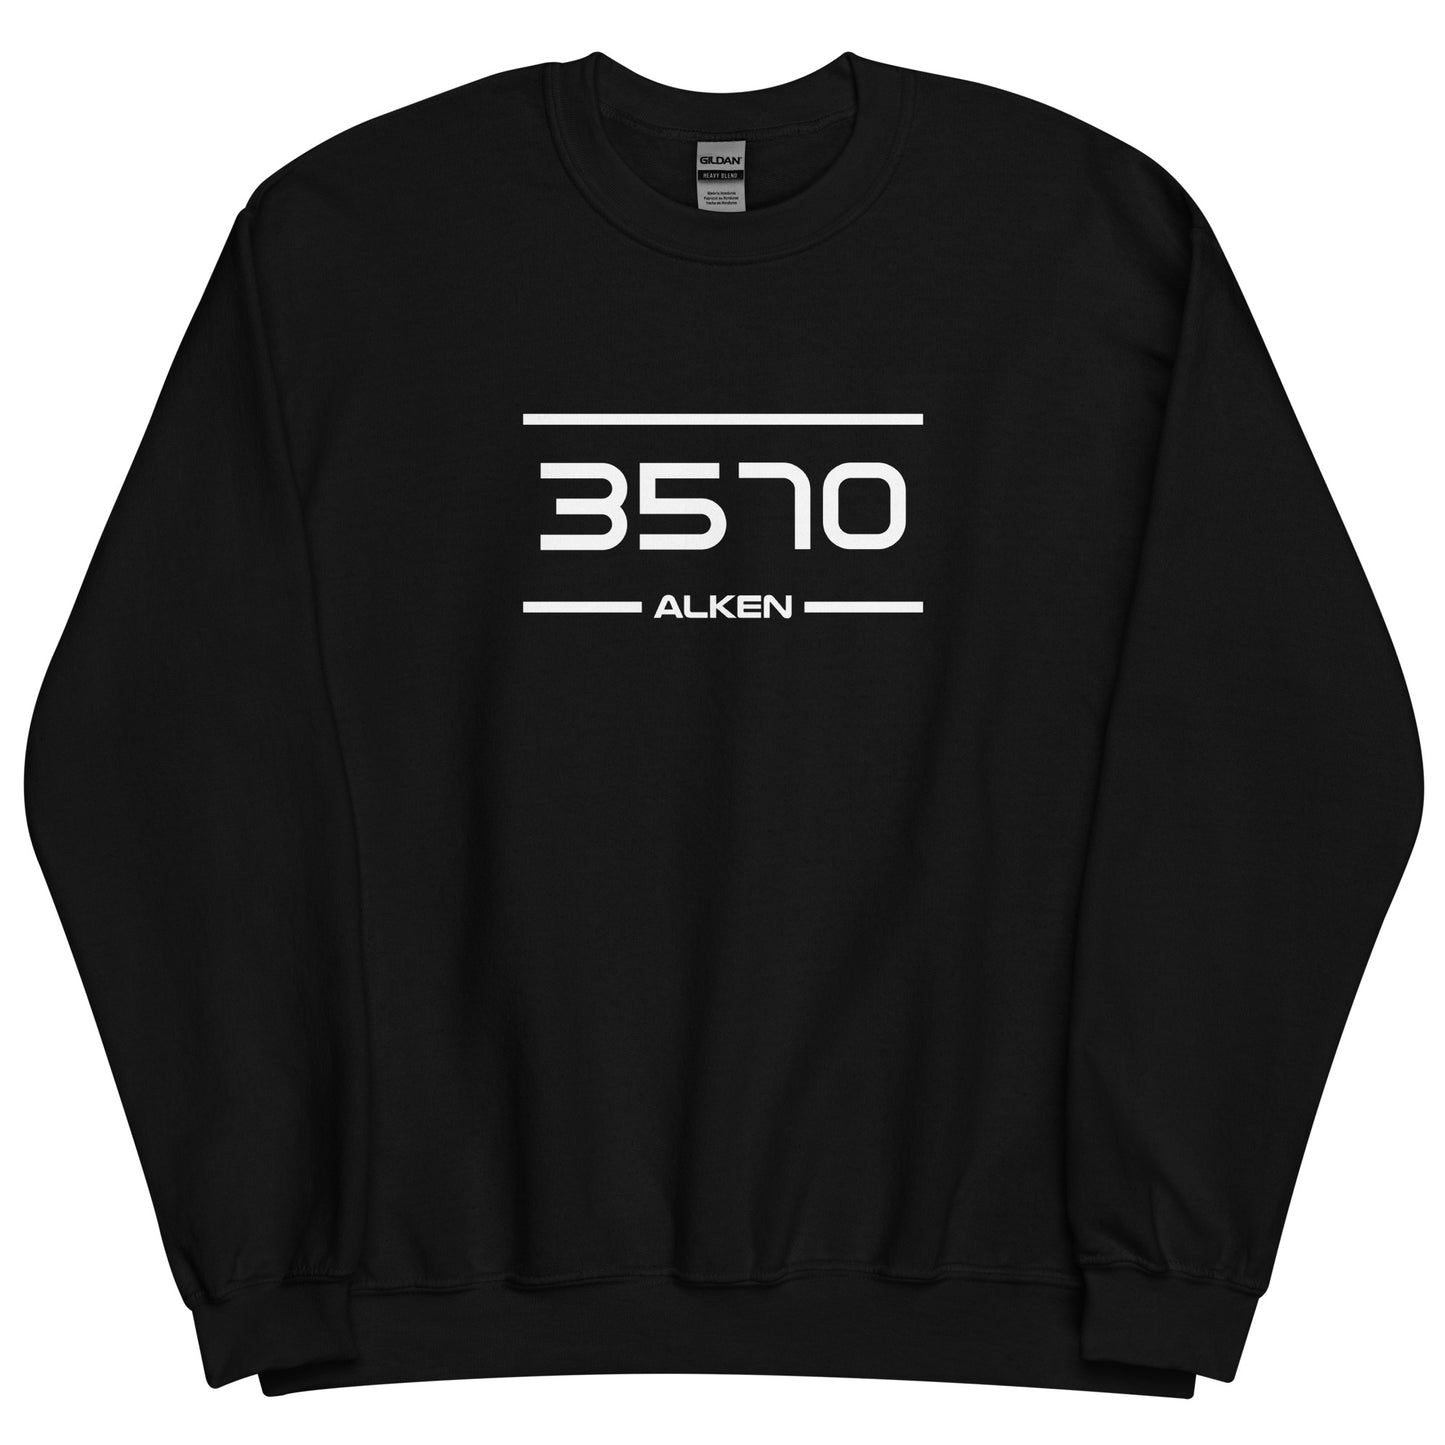 Sweater - 3570 - Alken (M/V)